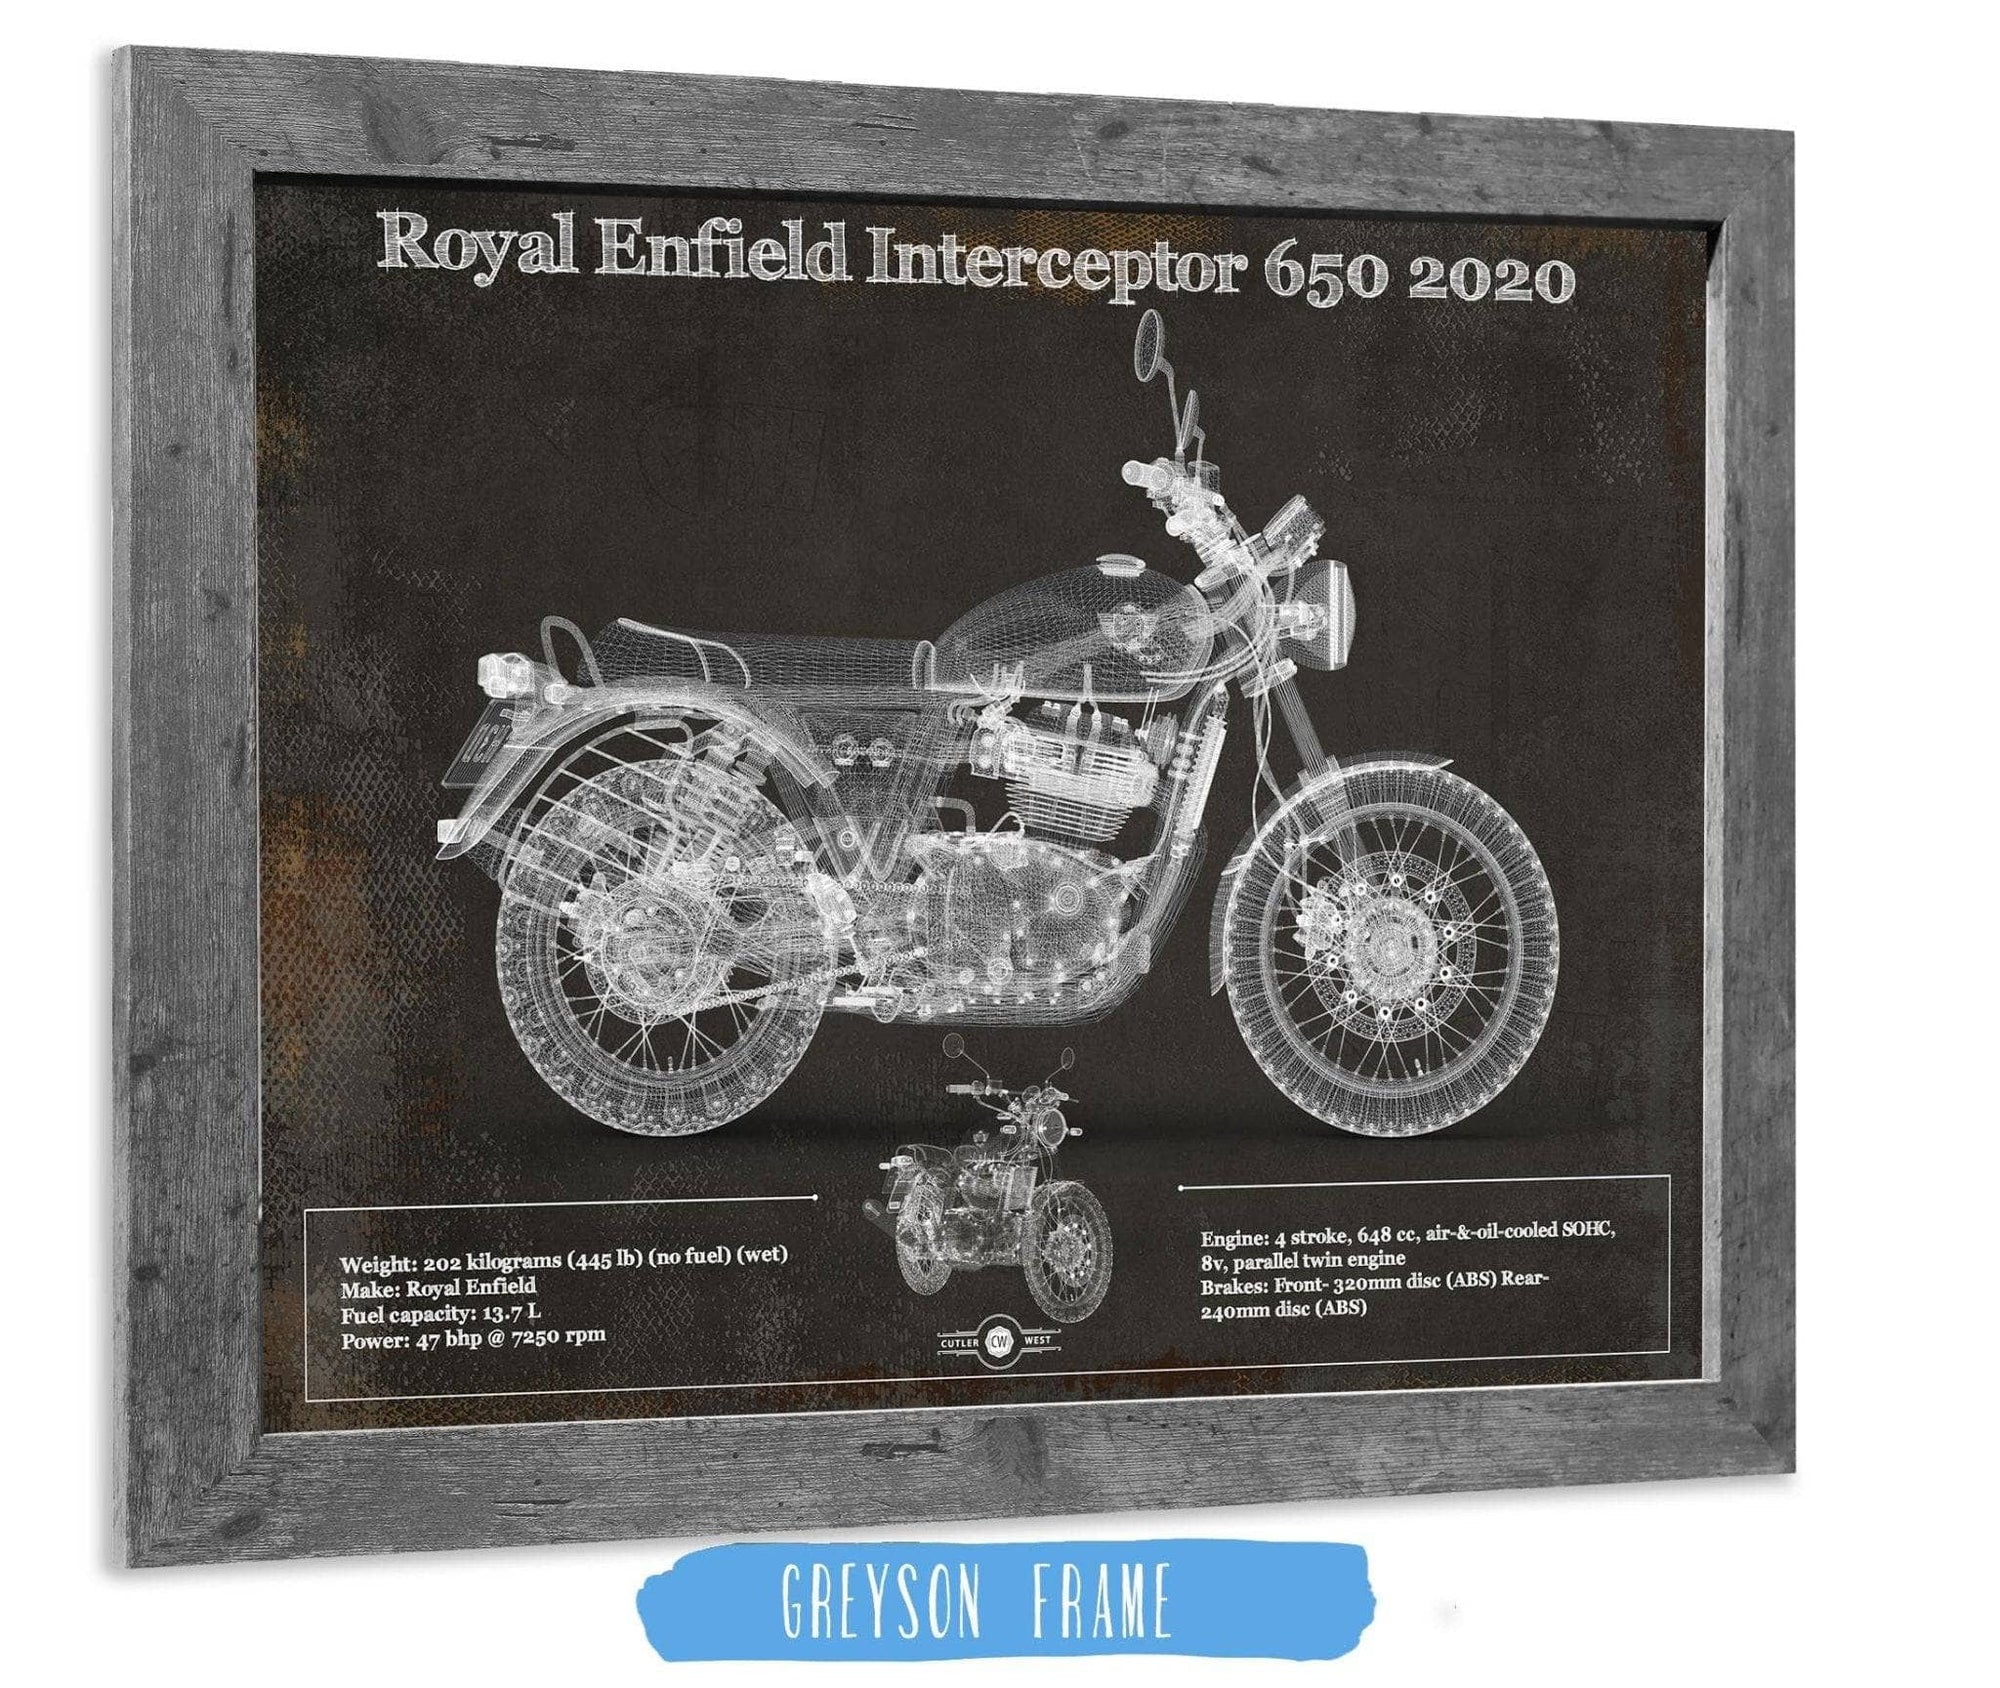 Cutler West 20" x 16" / Greyson Frame Royal Enfield Interceptor 650 2020 Blueprint Motorcycle Patent Print 845000206_26464